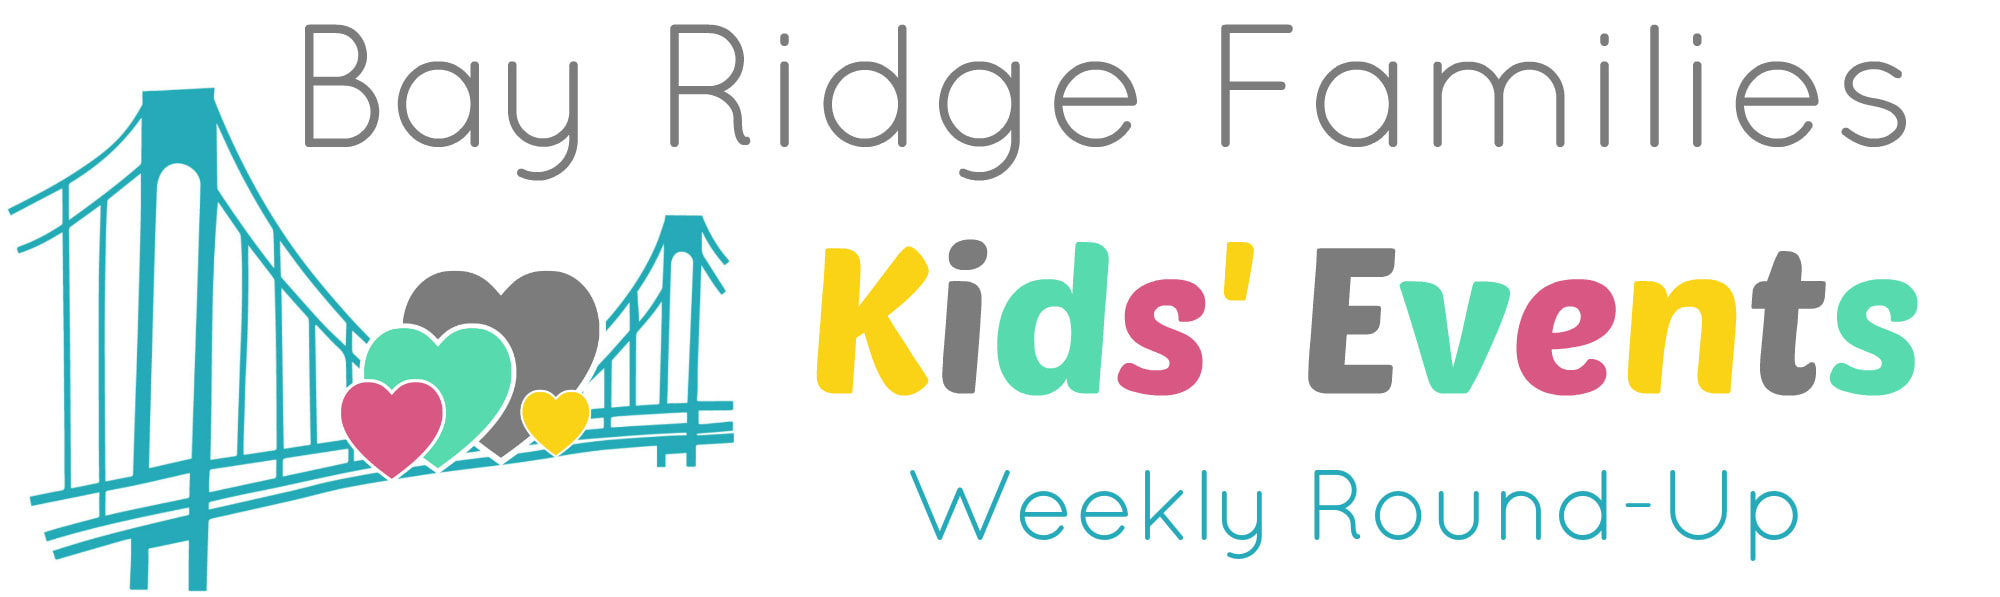 Bay Ridge Area Kids Events Roundup: Aug 31 - Sept 6